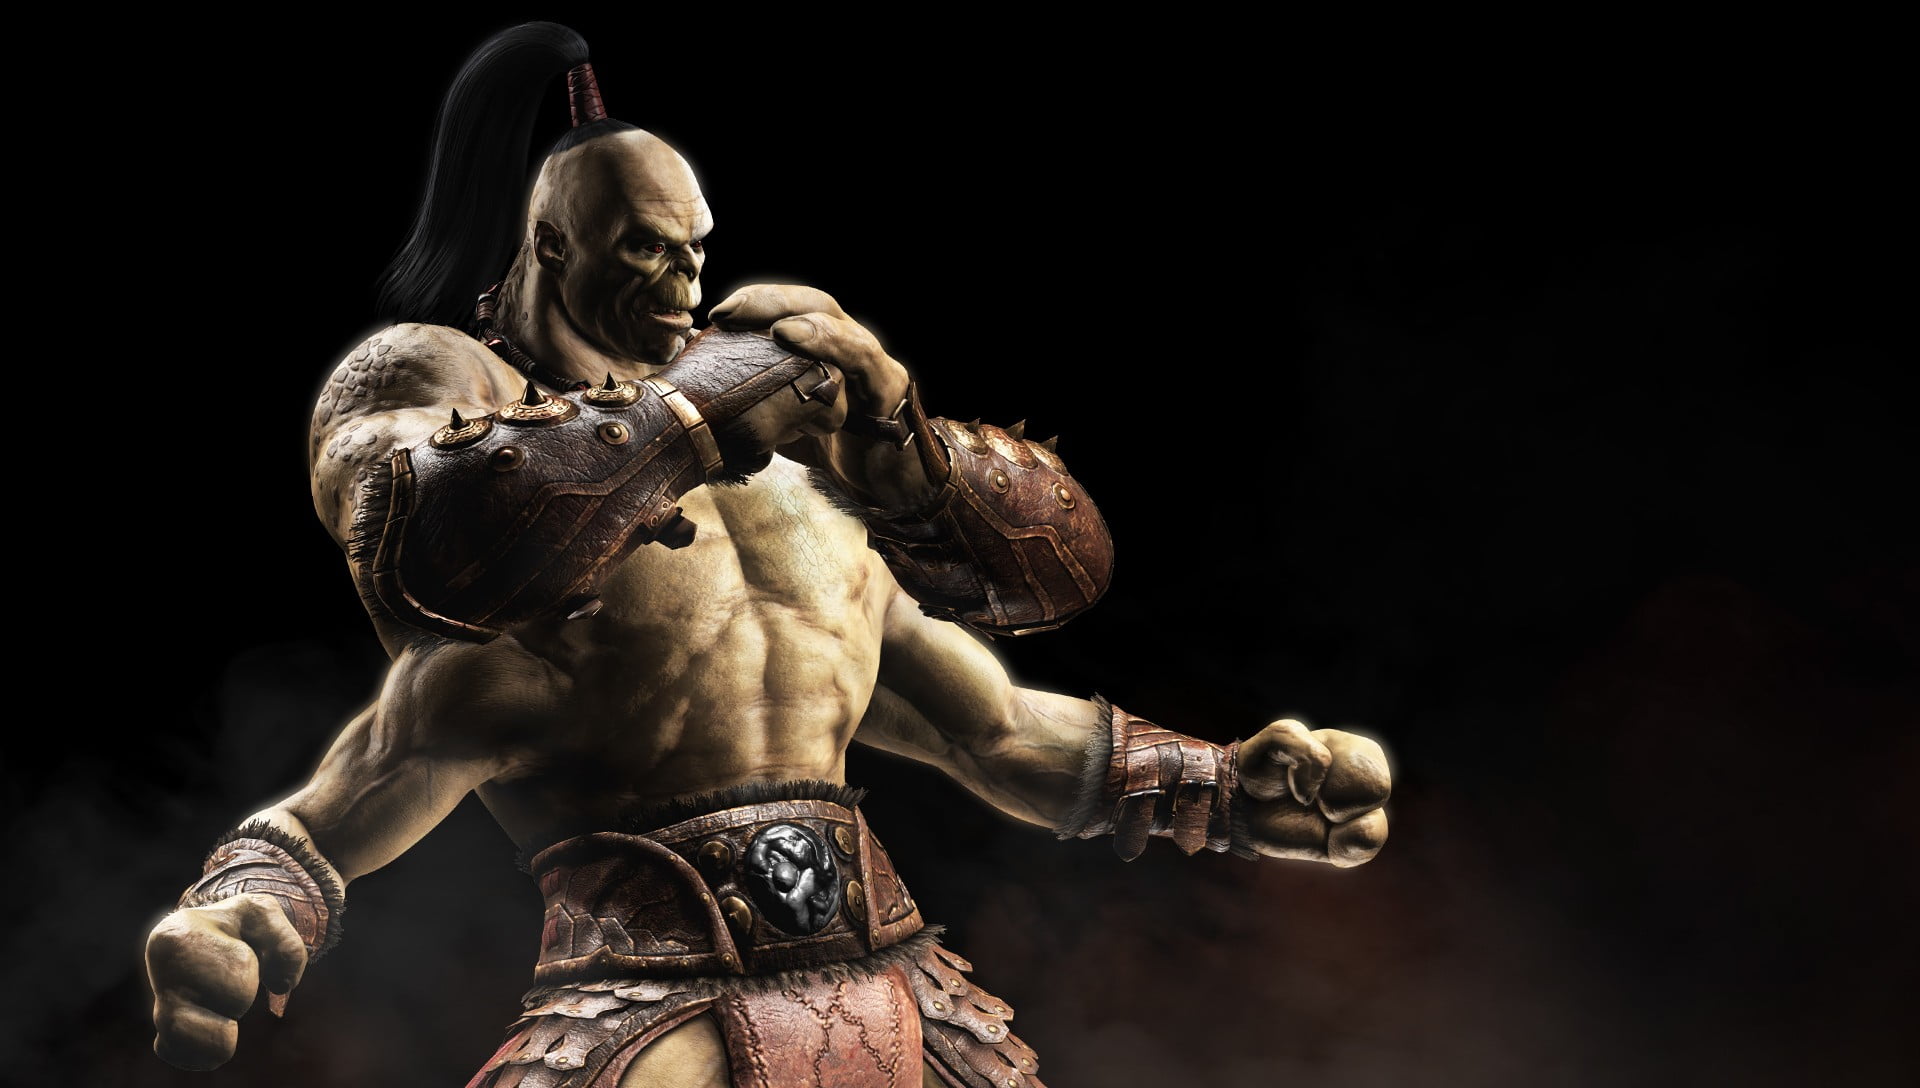 Mortal Kombat X, Goro, PC gaming, Four Arms, art and craft